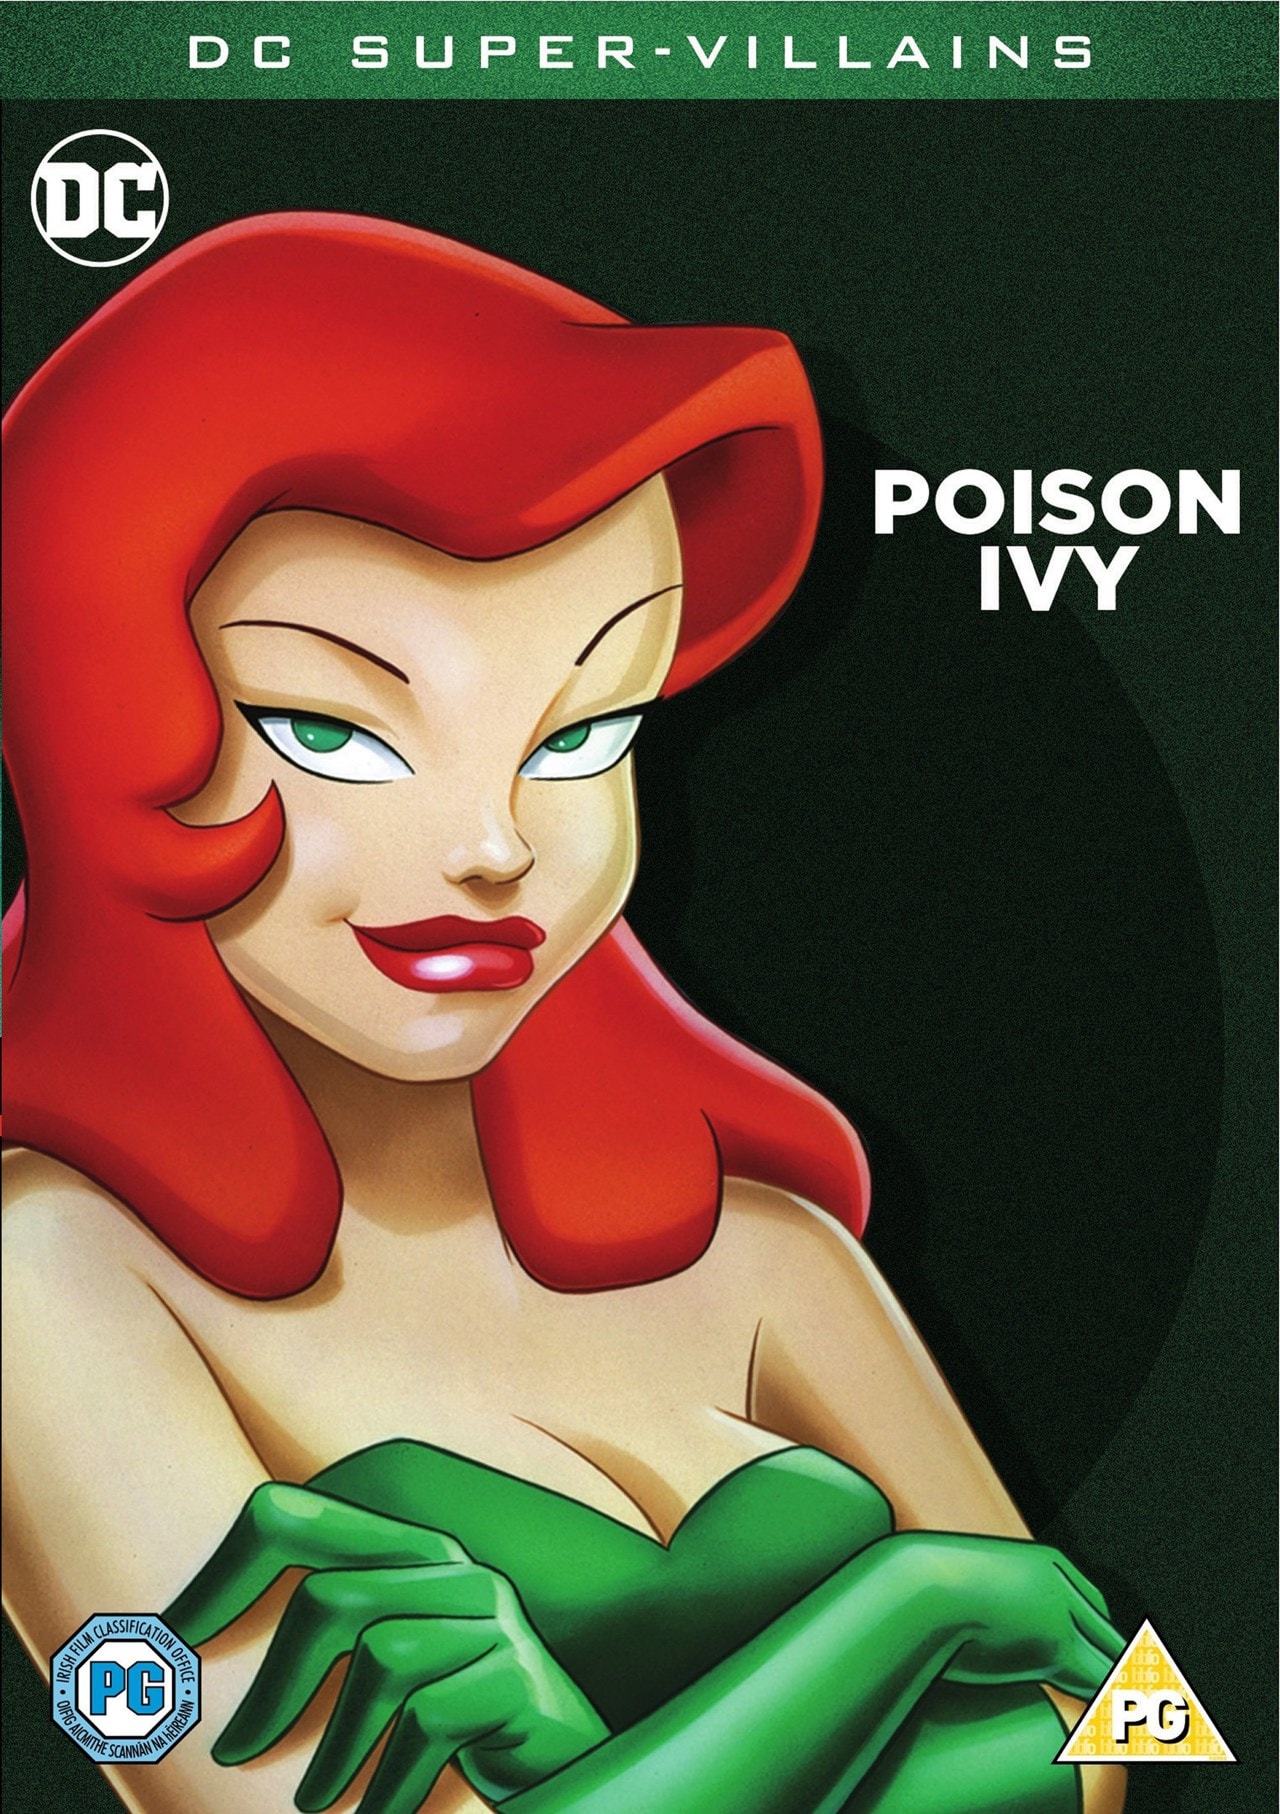 DC Super-villains: Poison Ivy | DVD | Free shipping over £20 | HMV Store